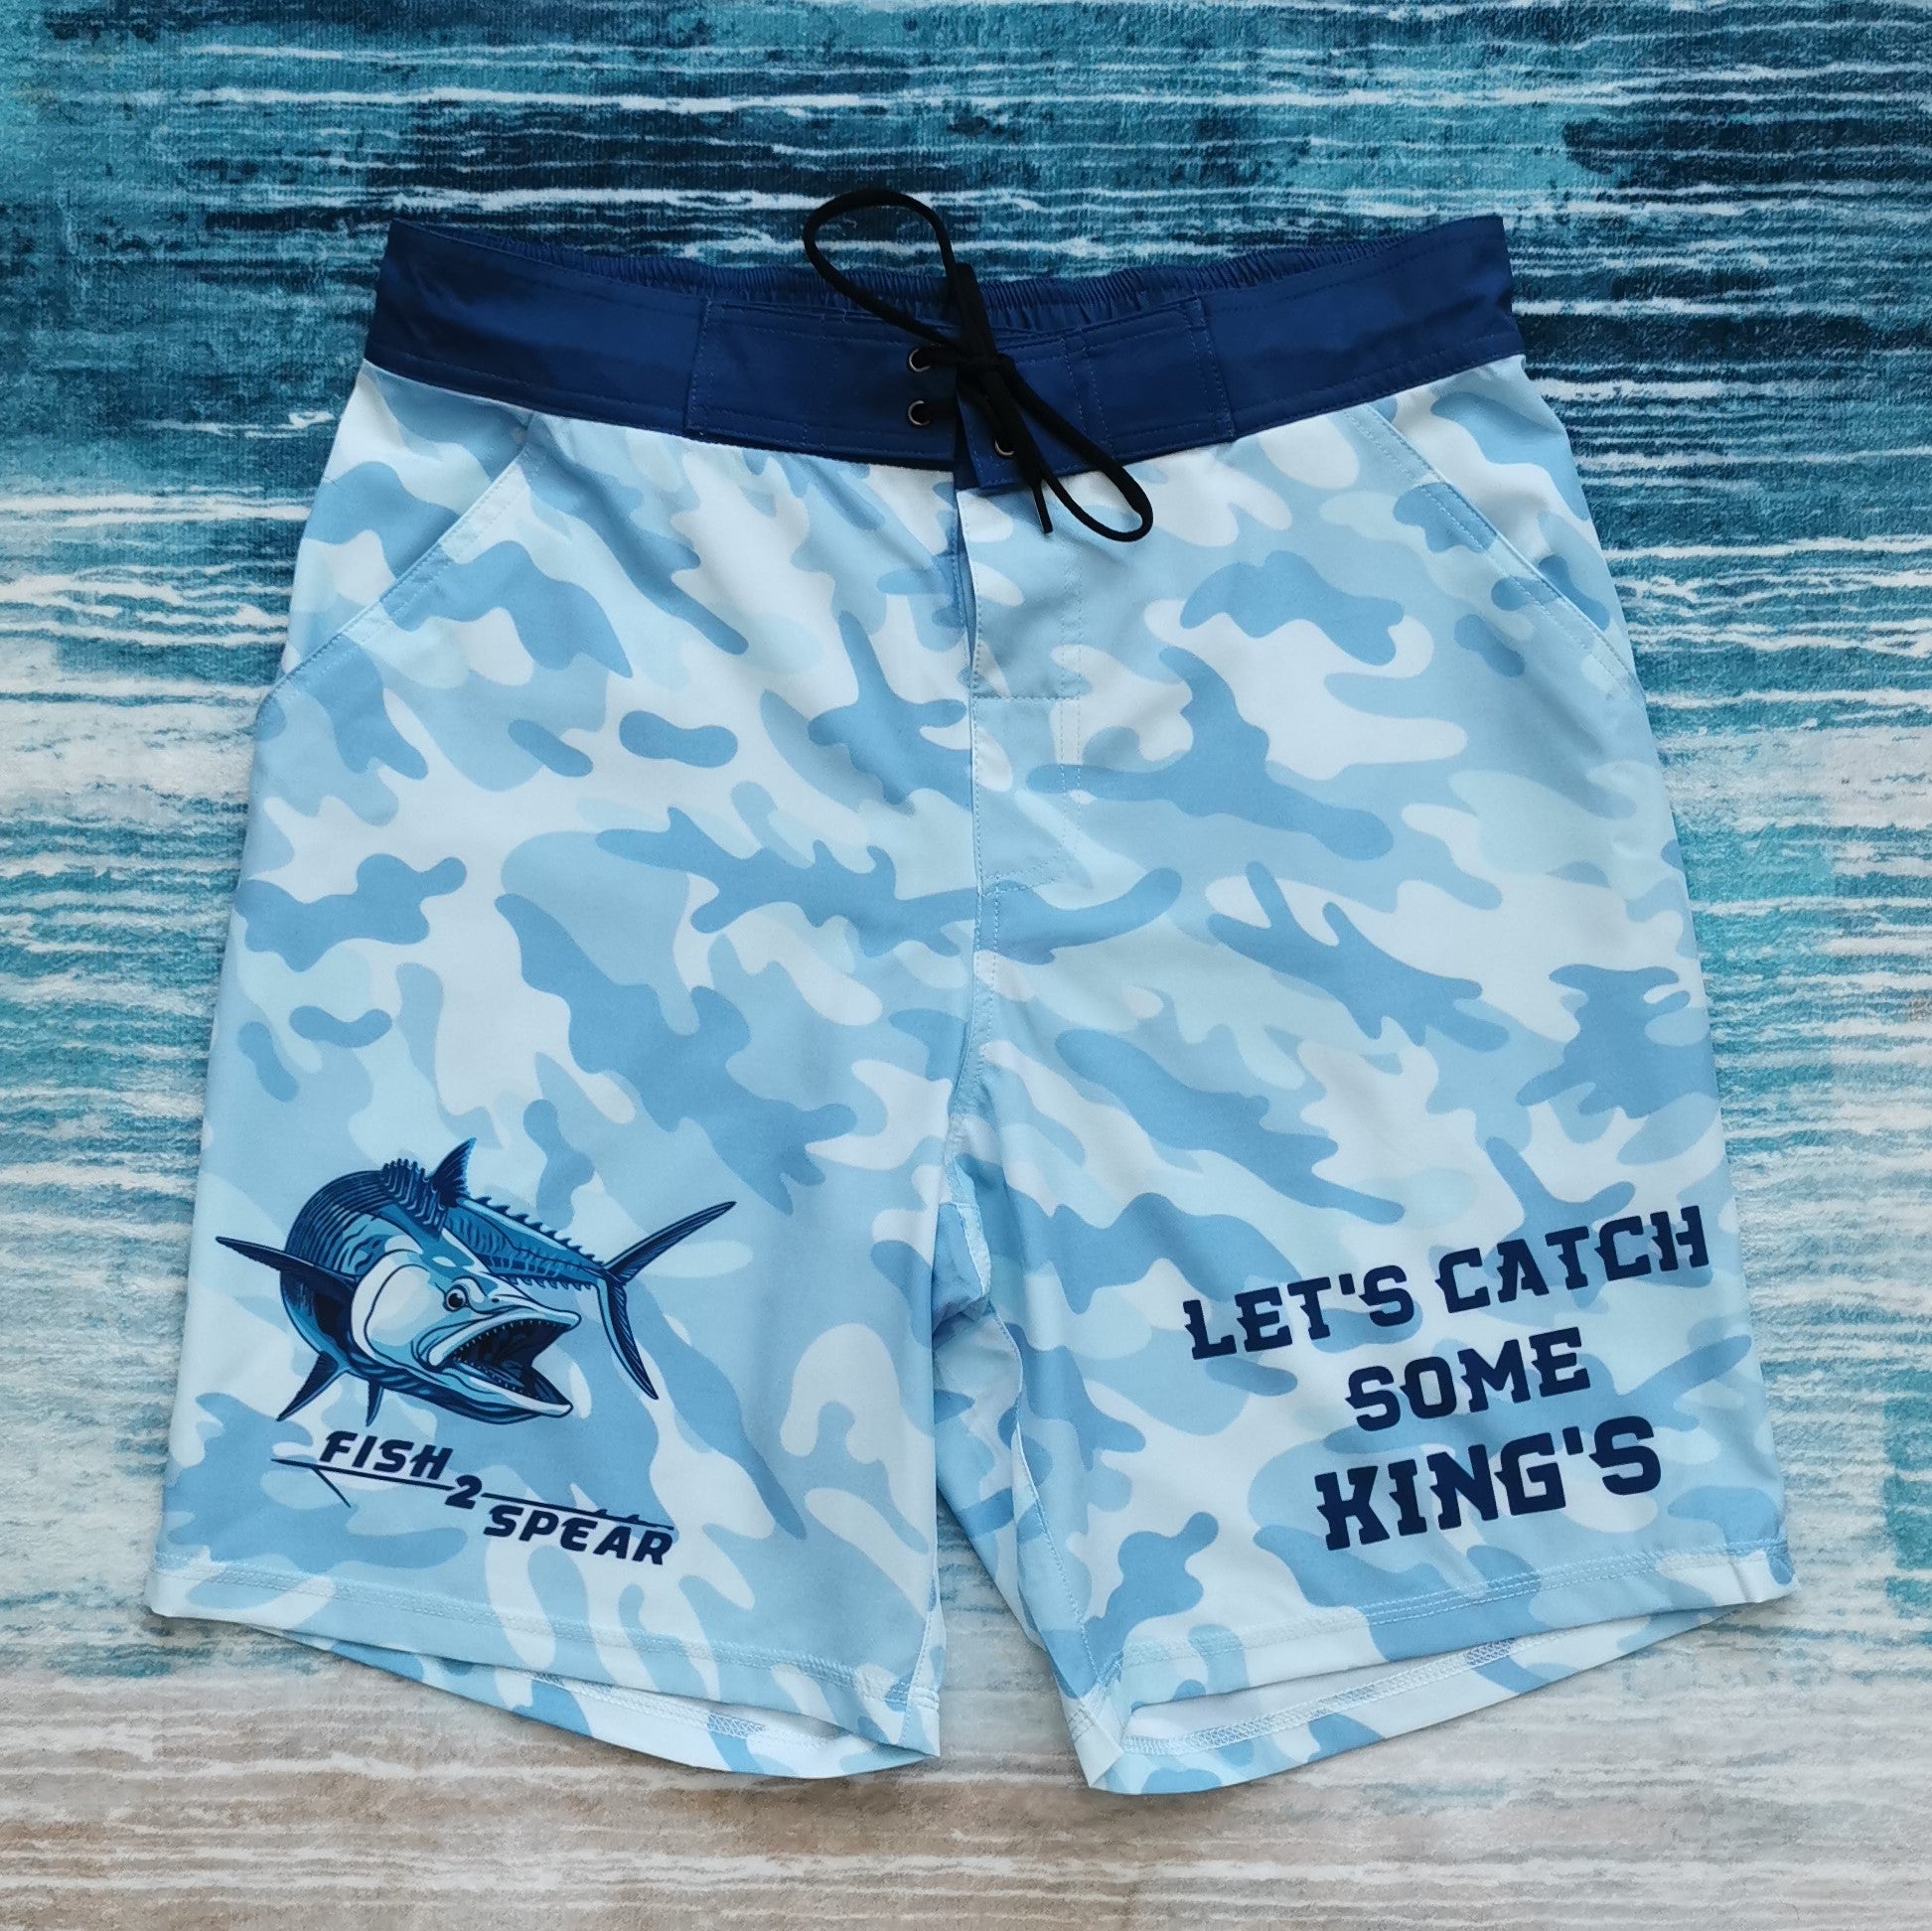 Kingfish Fishing Shorts, Board Short, Swimming Short, Water Repellent Short